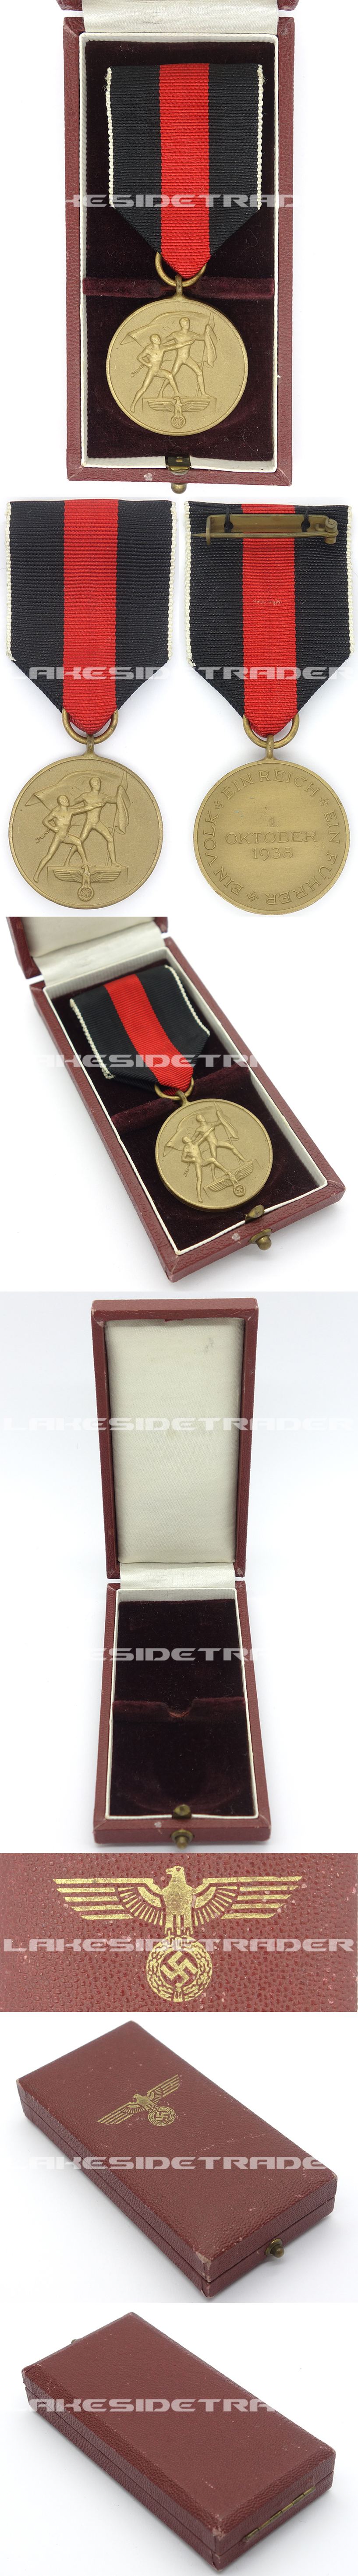 Cased Sudetenland Commemorative Medal